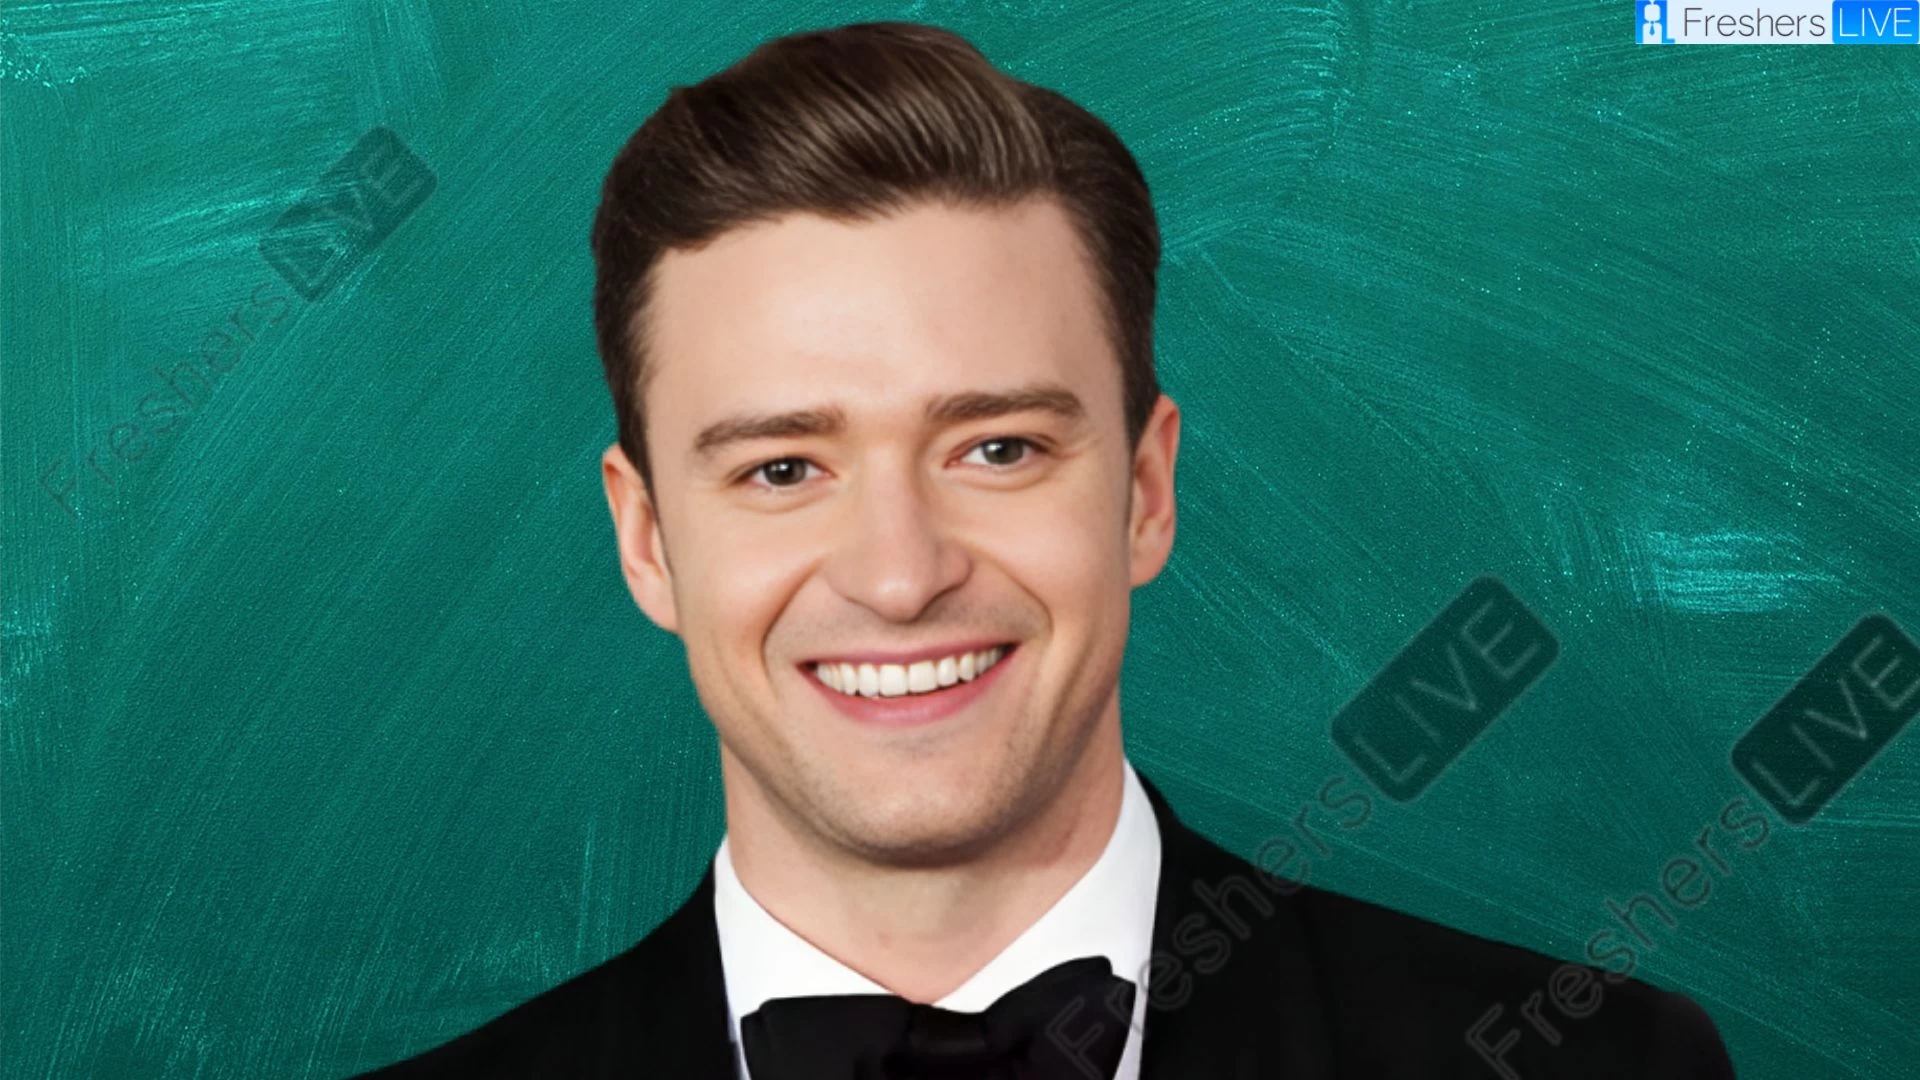 Etnia de Justin Timberlake, ¿Cuál es la etnia de Justin Timberlake?